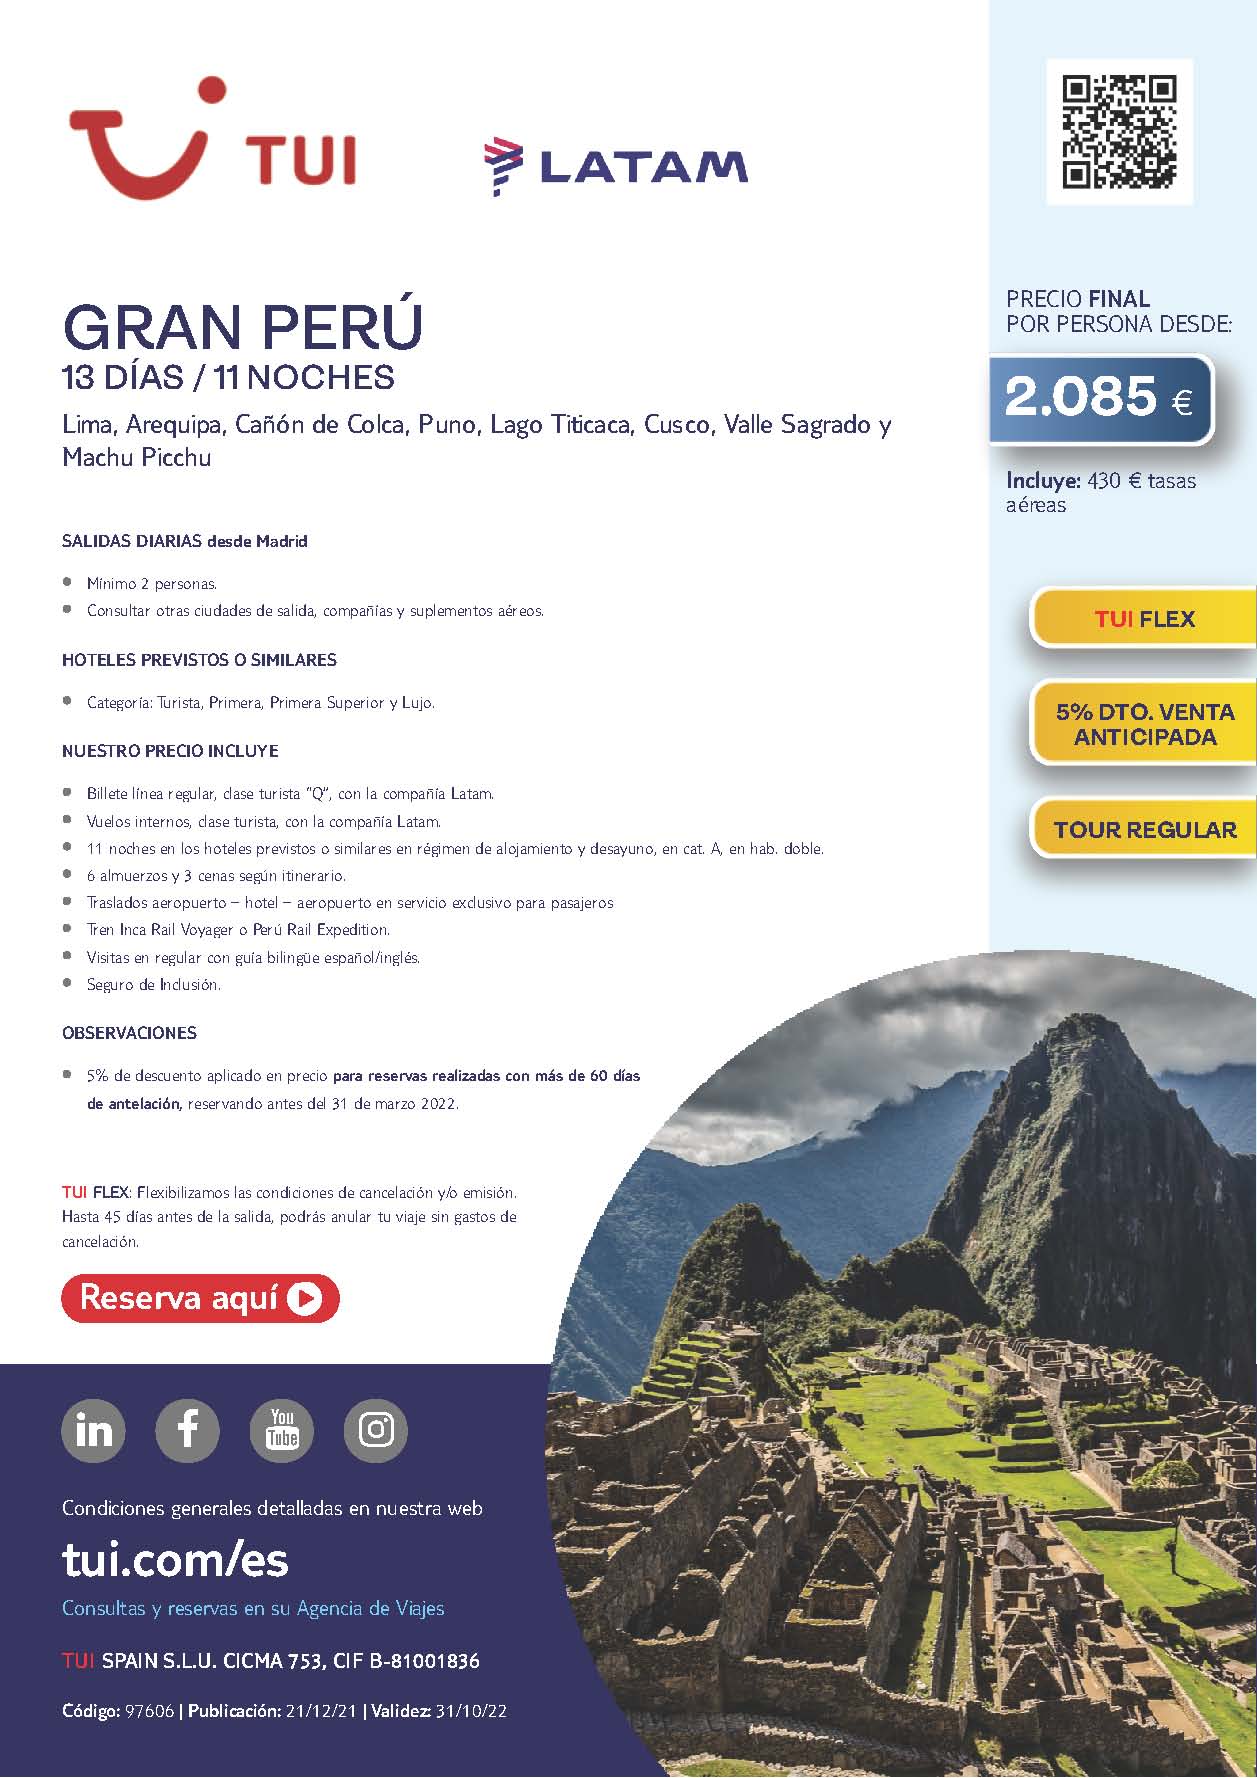 Oferta TUI Peru Gran Peru 13 dias 2022 salidas desde Madrid vuelos Latam